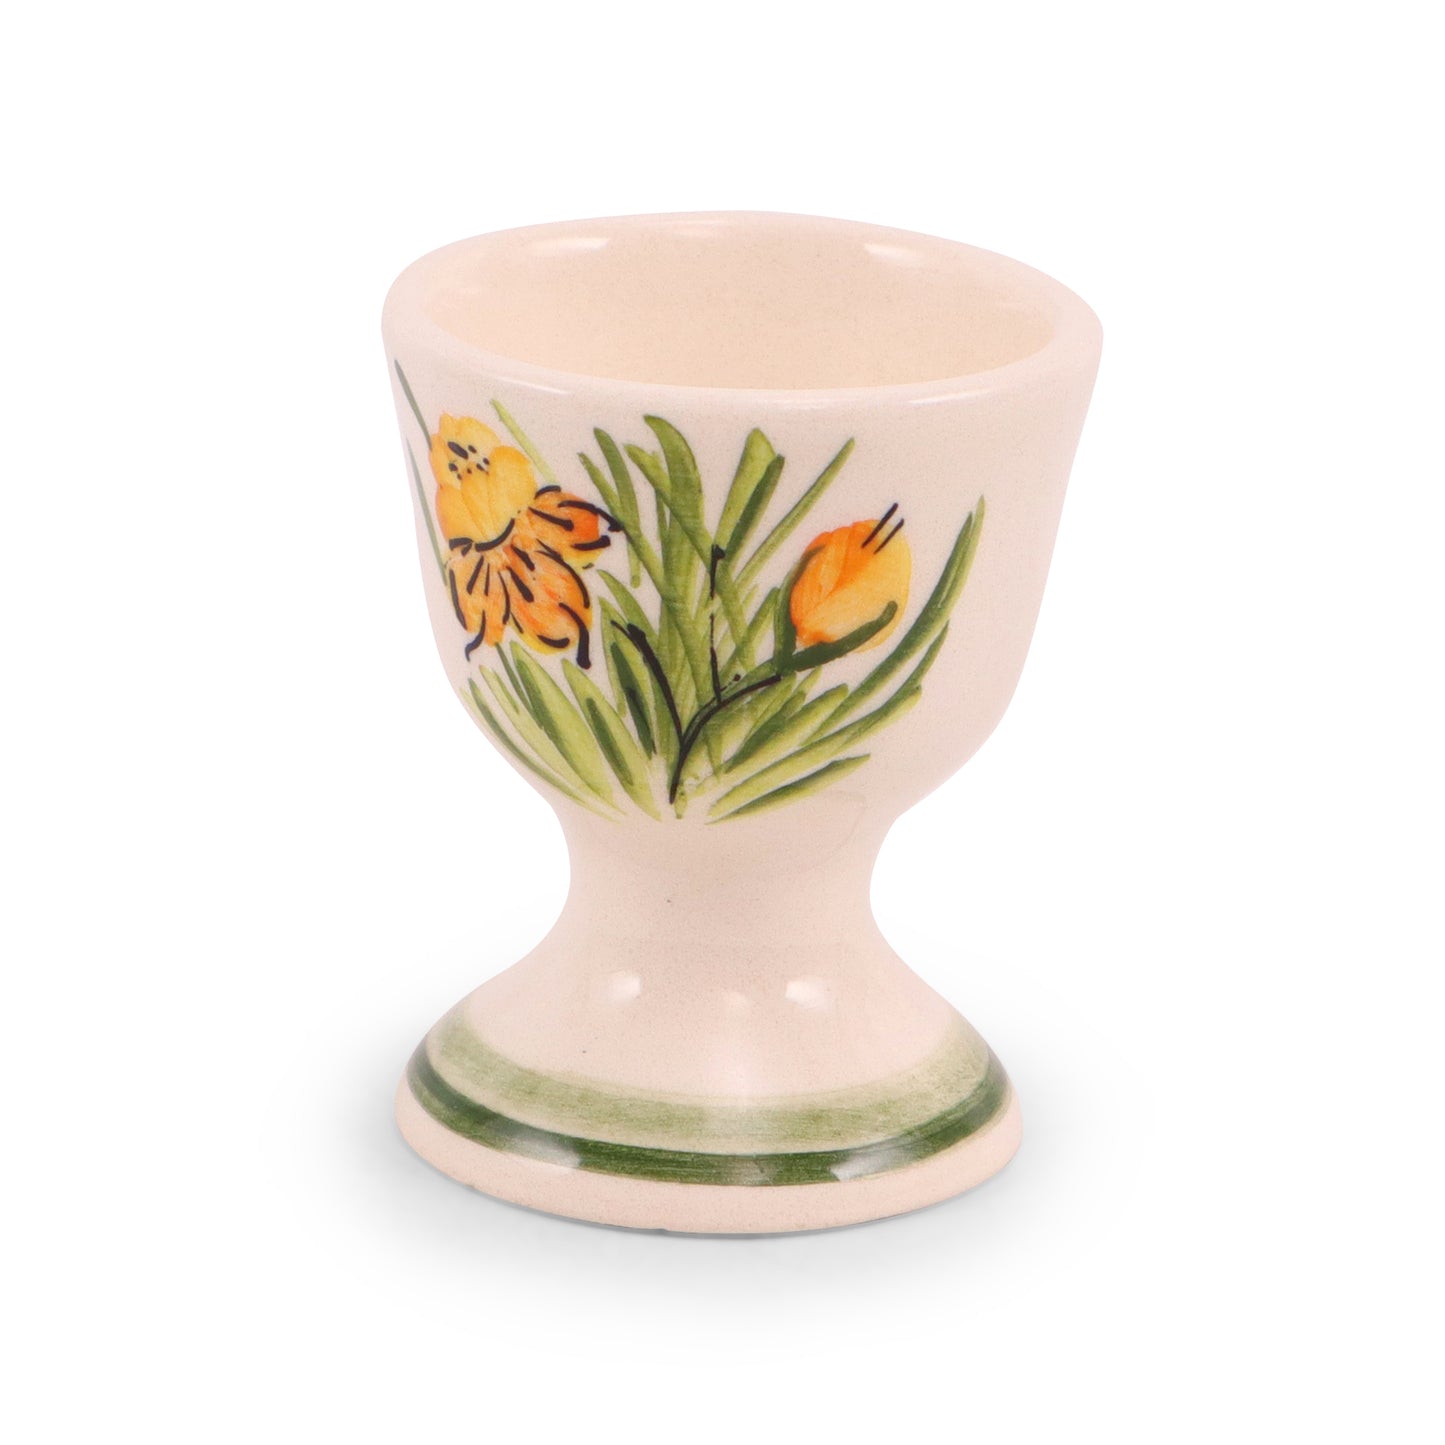 2"x2.5" Egg Cup. Pattern: Daffodil